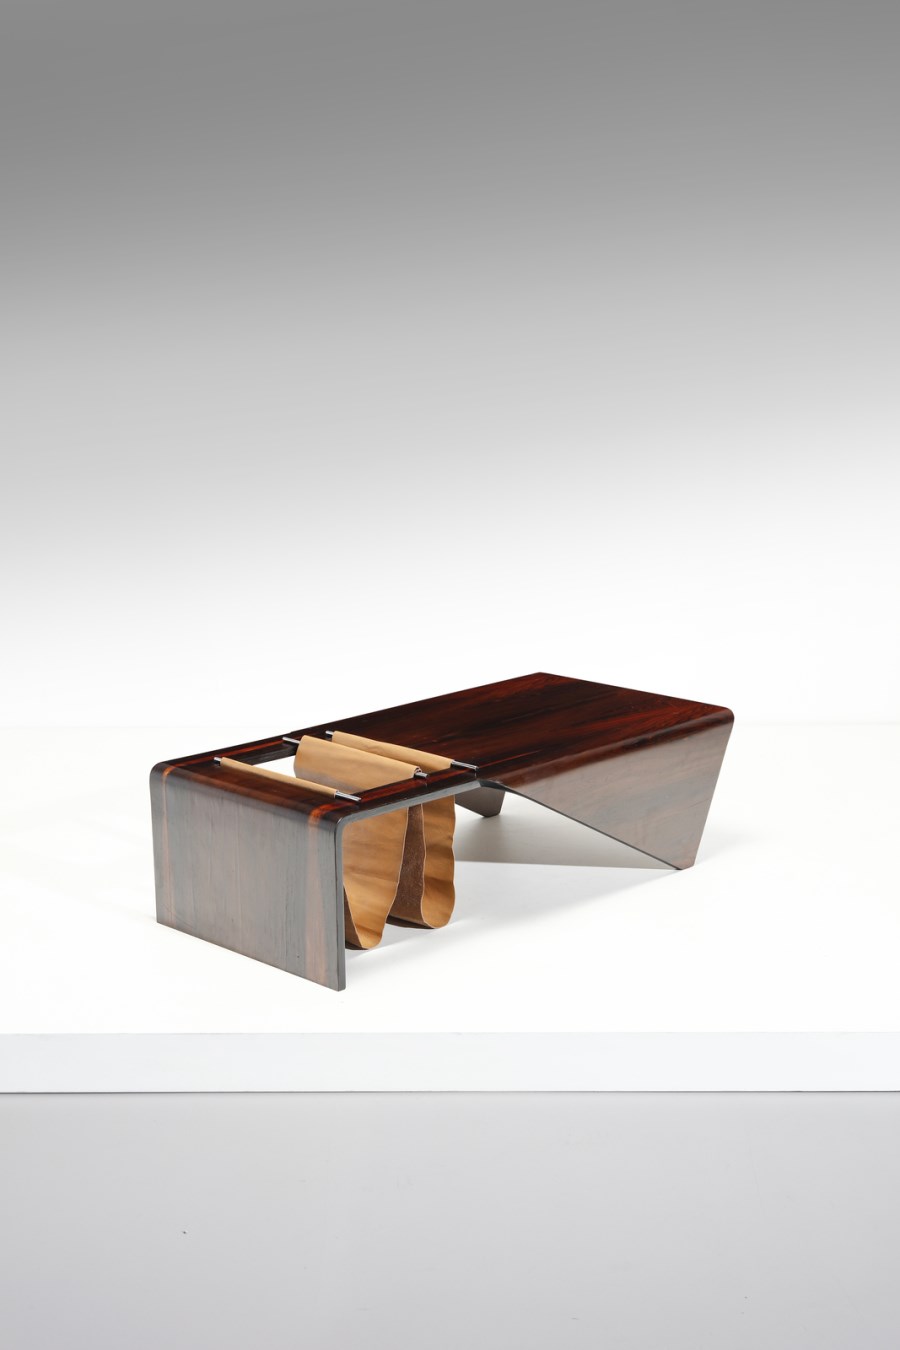 Andorinha coffee table (Jorge Zalszupin )